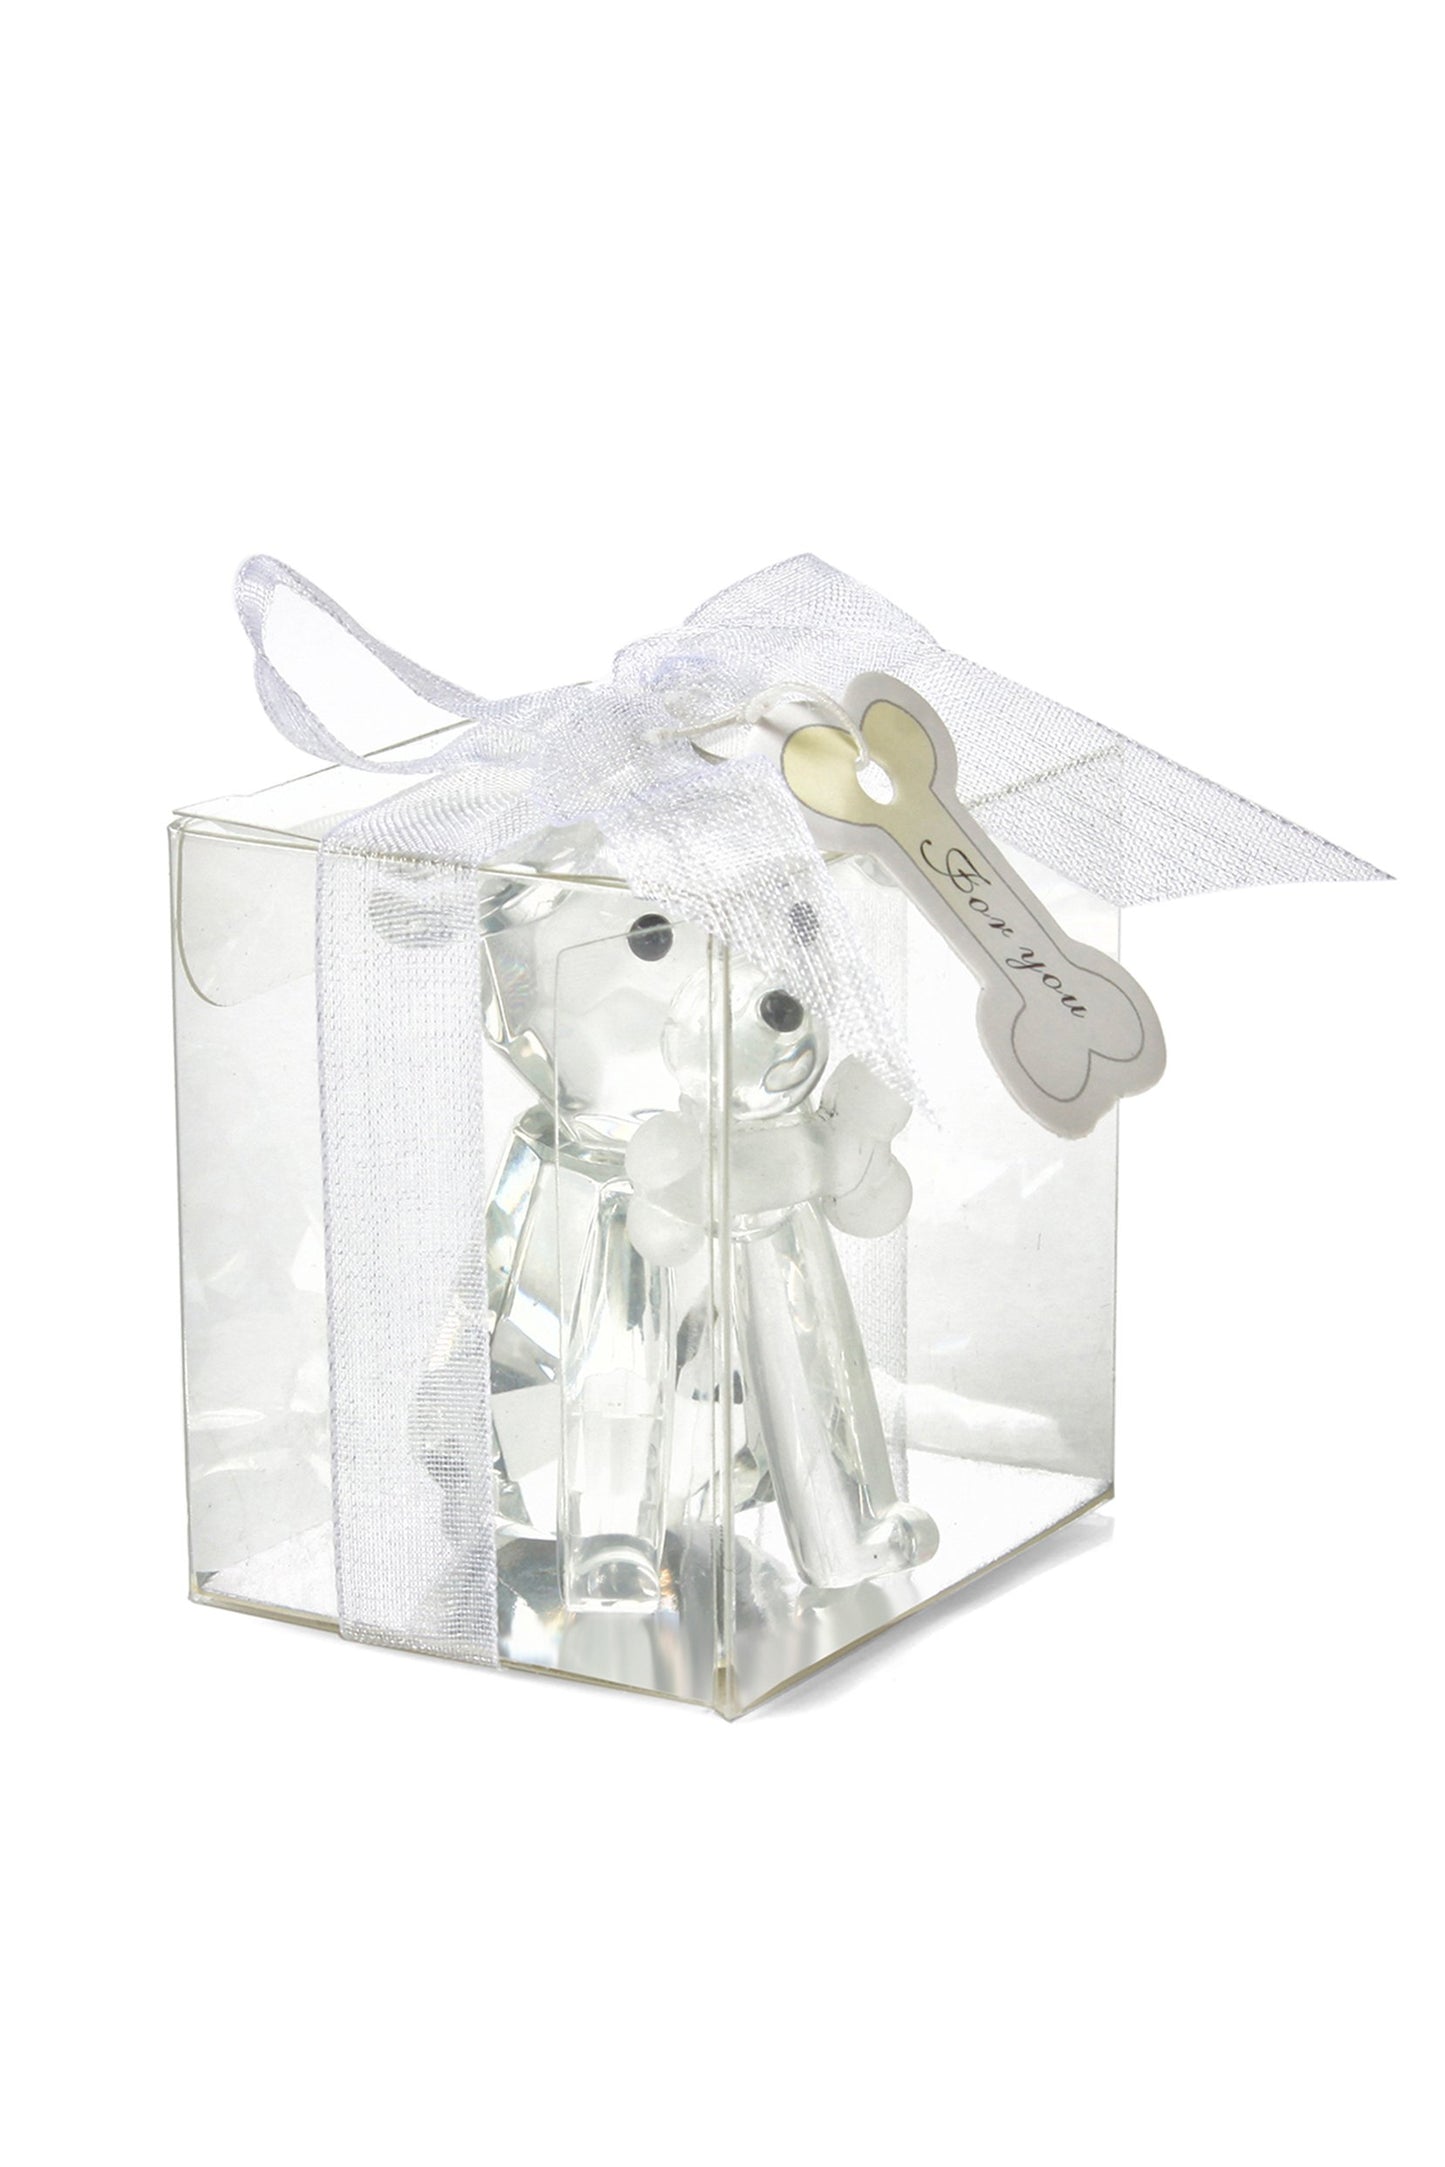 Cute Crystal Dog and Bone Miniature Favor Ornaments CGF0149 (Set of 6 pcs)